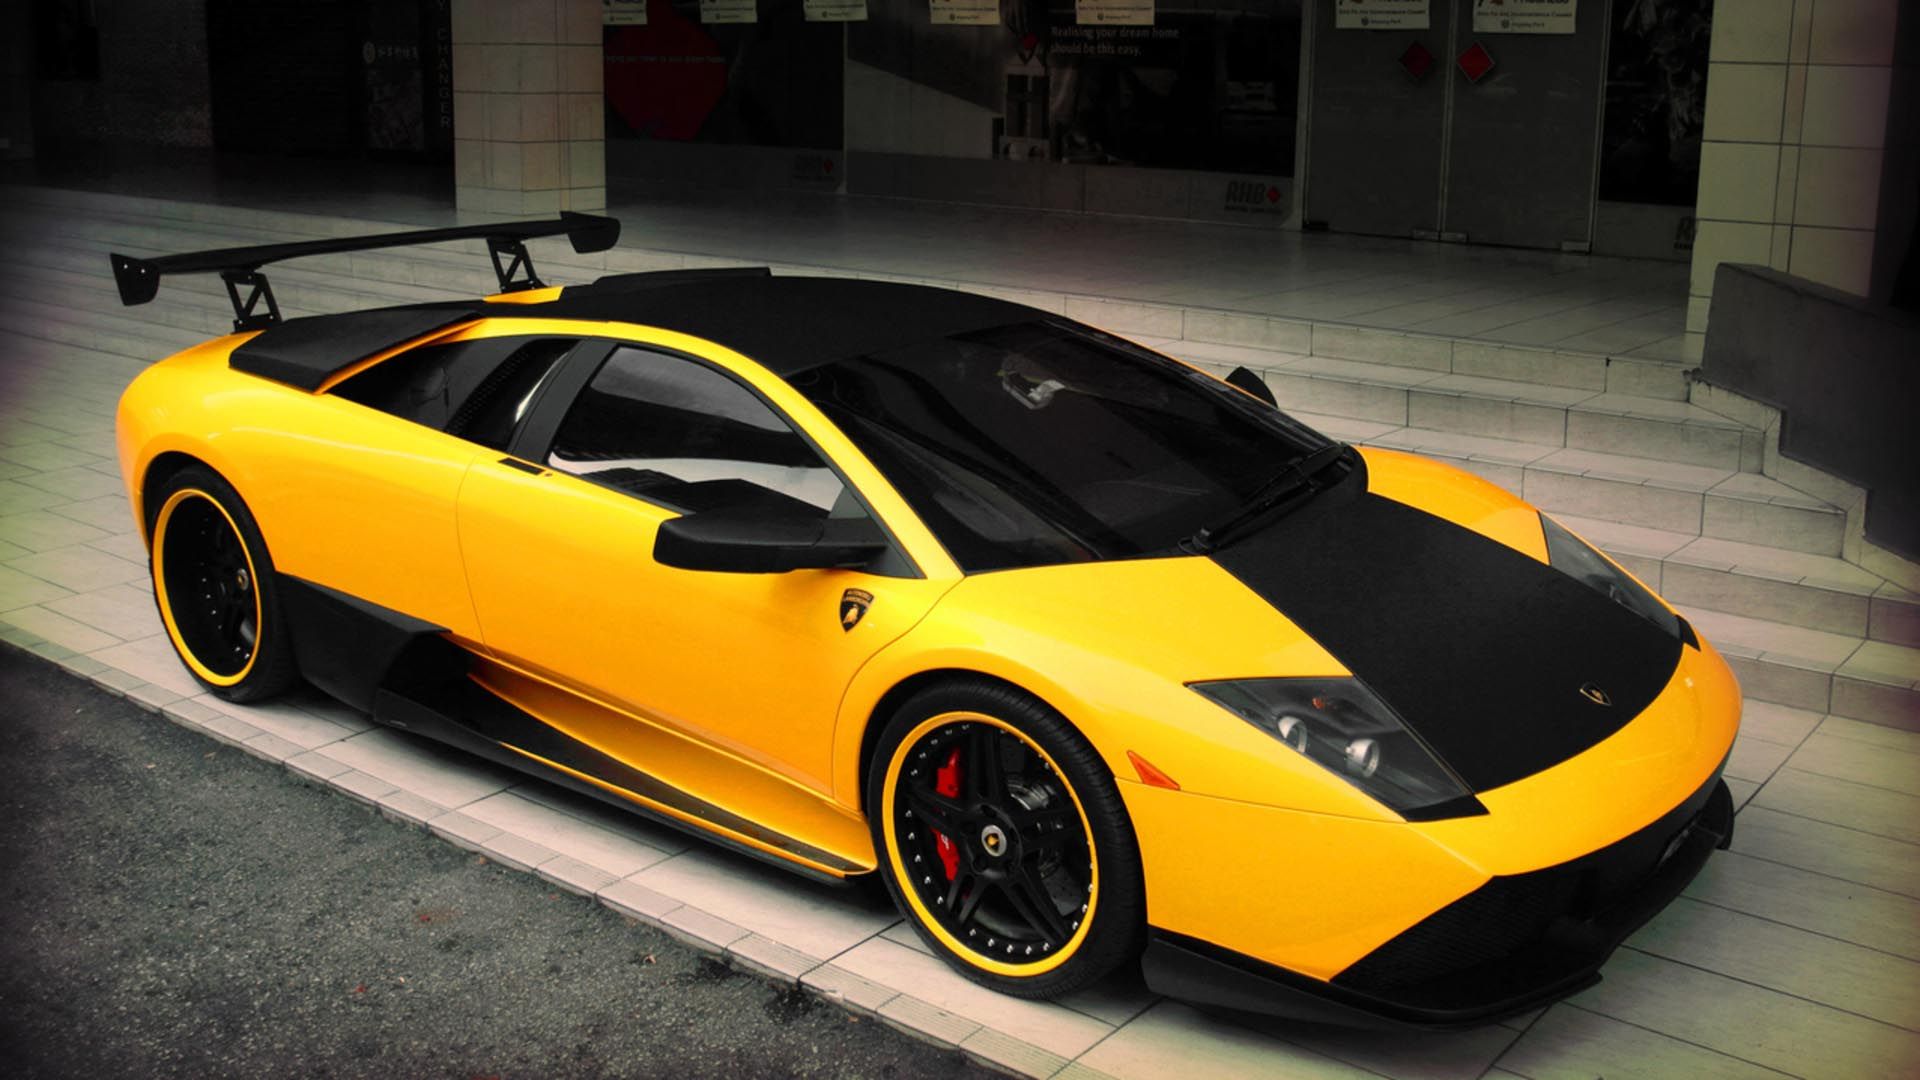 Elegant Black And Yellow Lamborghini Car Wallpaper Cars